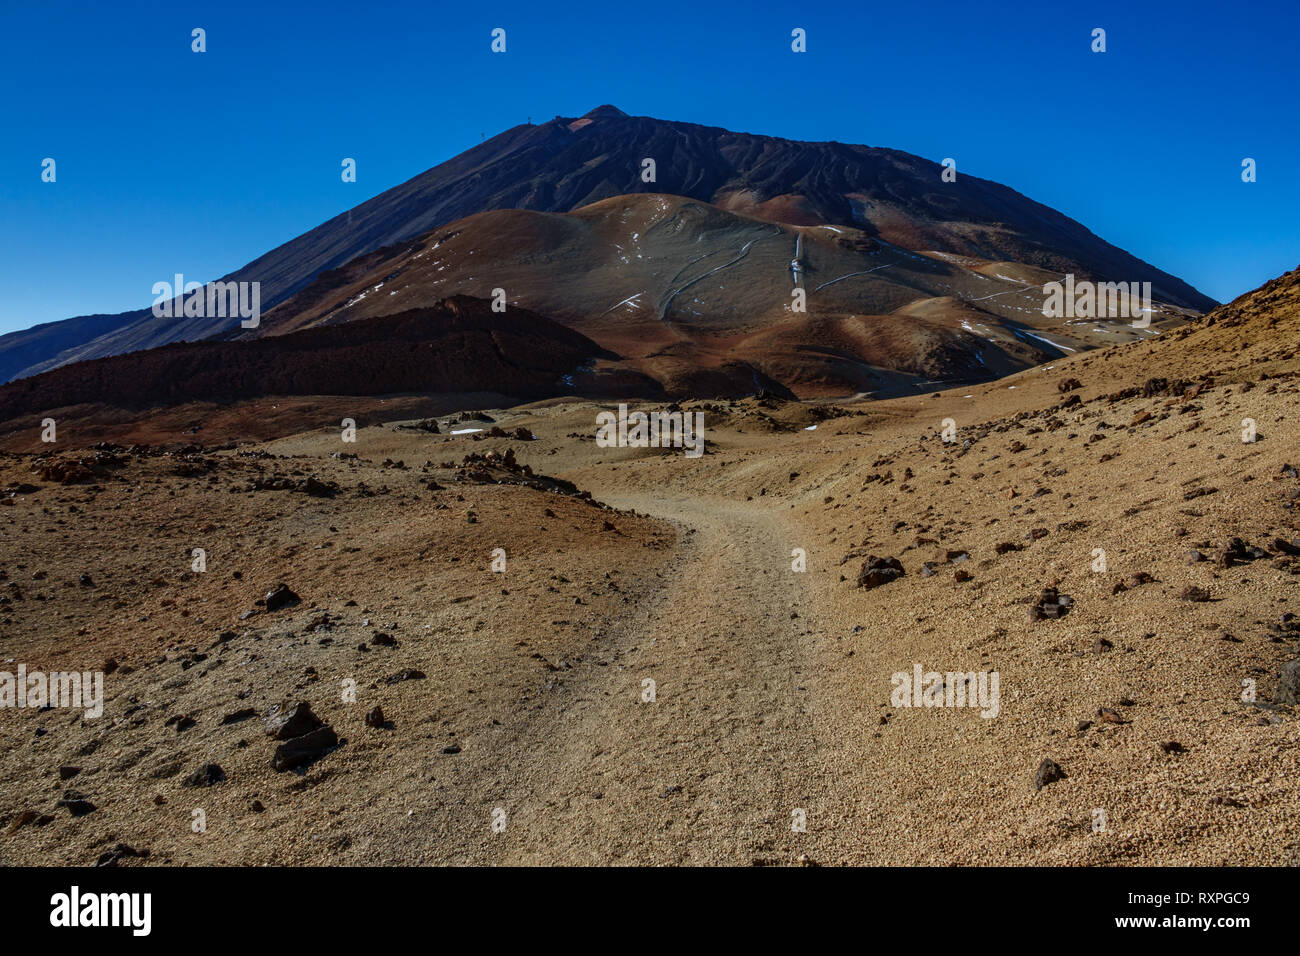 Mars landscape with tracks towards Teide volcano peak Stock Photo